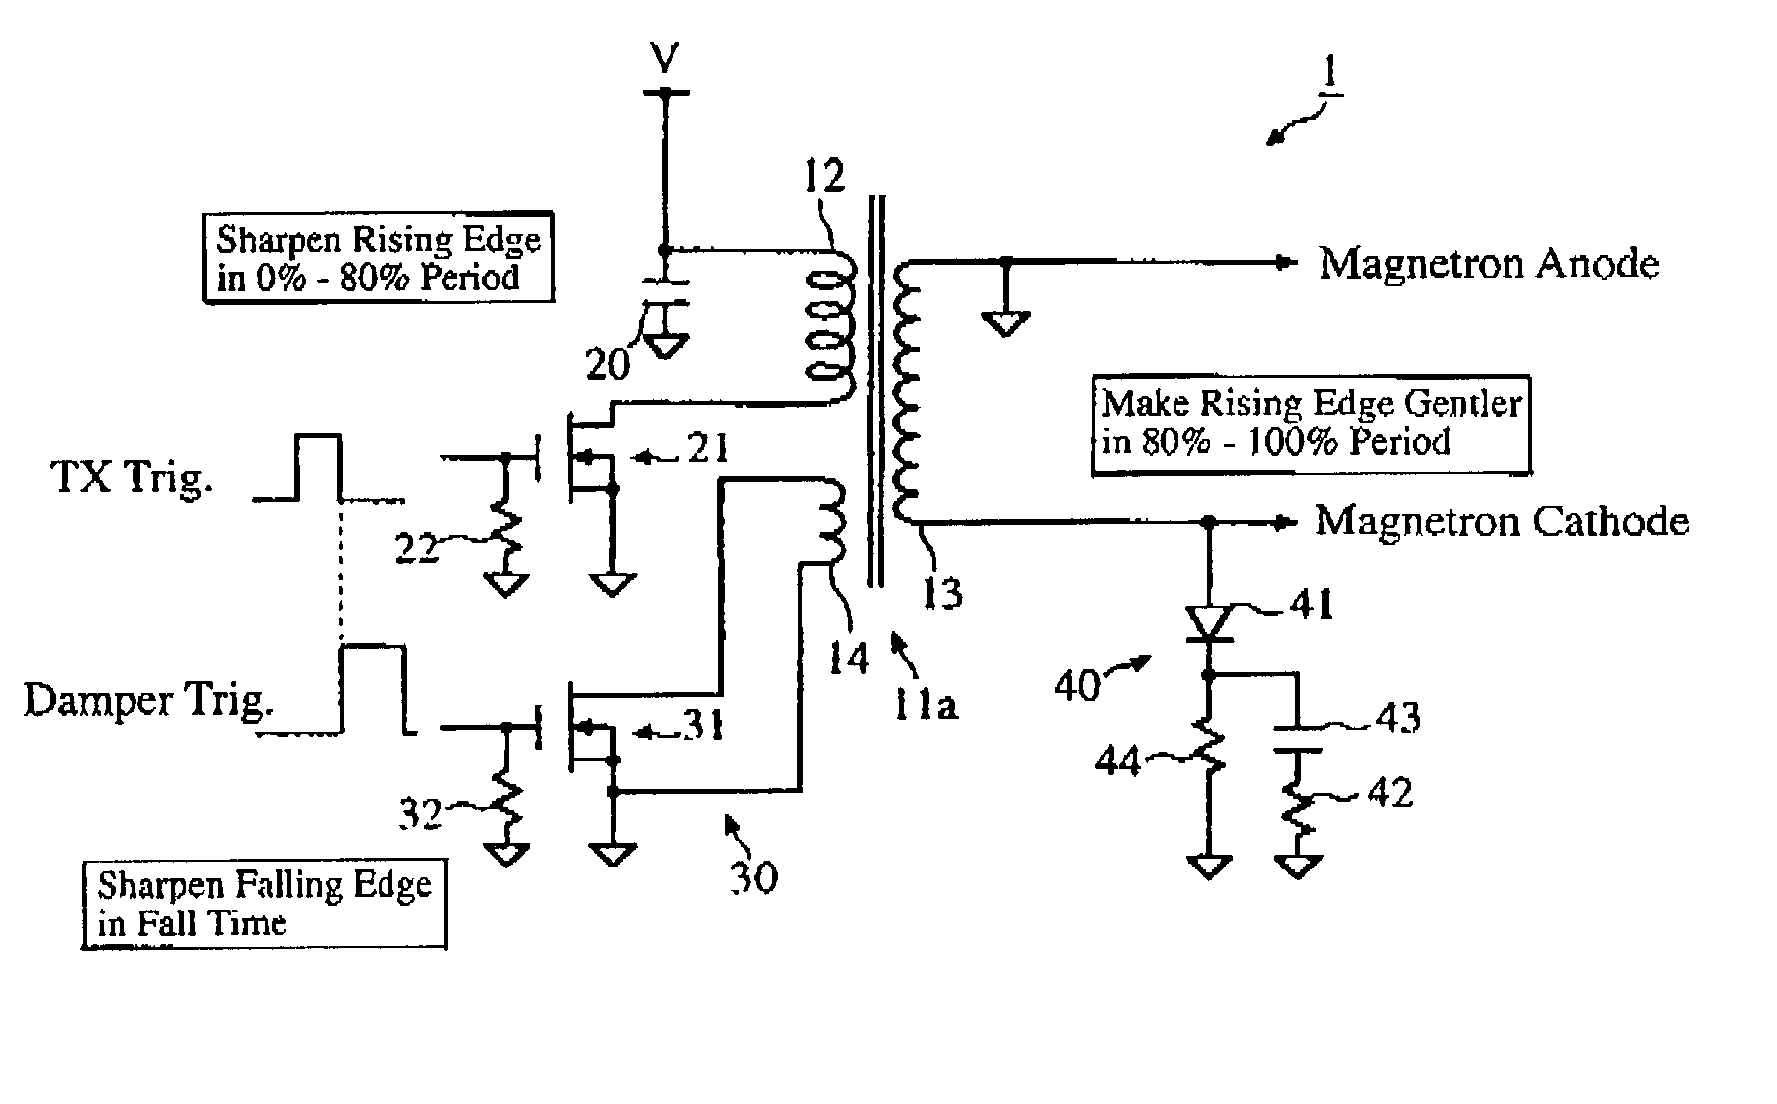 Magnetron drive circuit